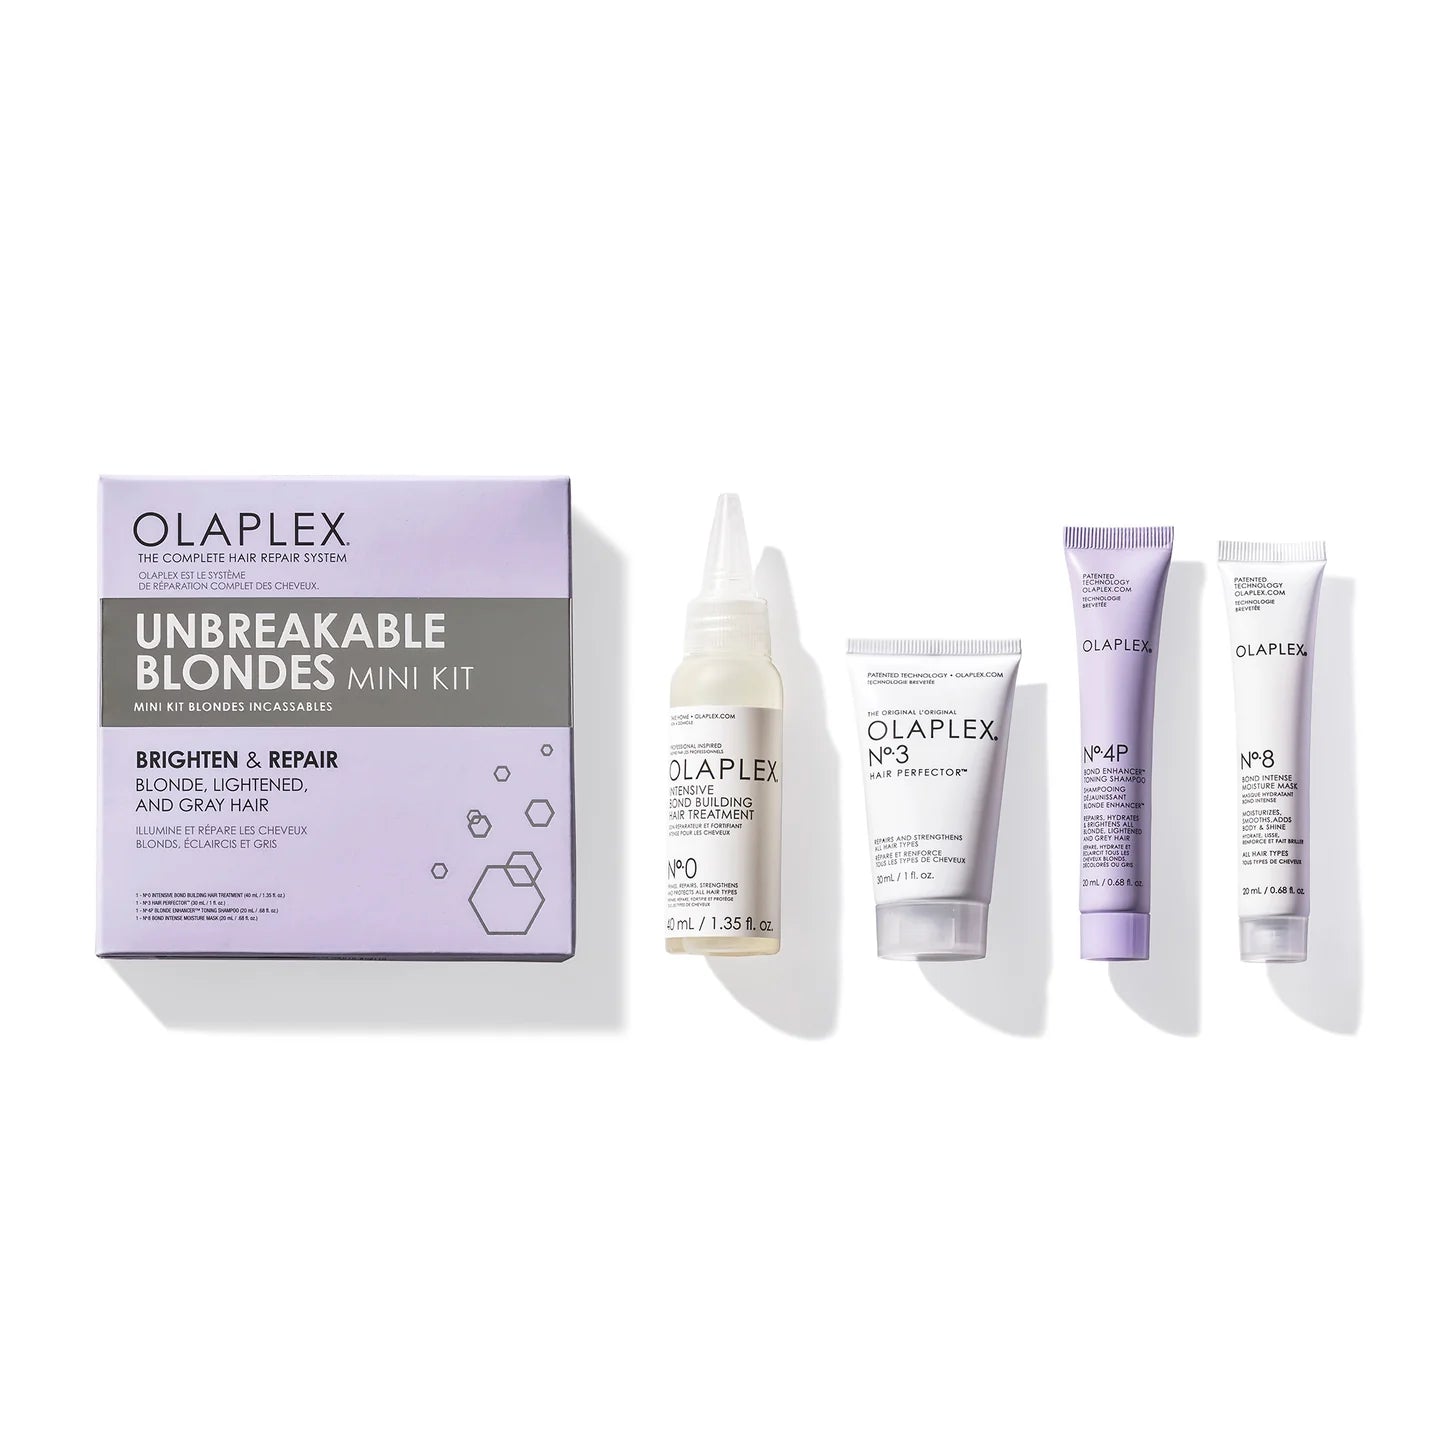 Mini kit for restoration of blonde by Olaplex (Olaplex Unbreakable Blondes Mini Kit)